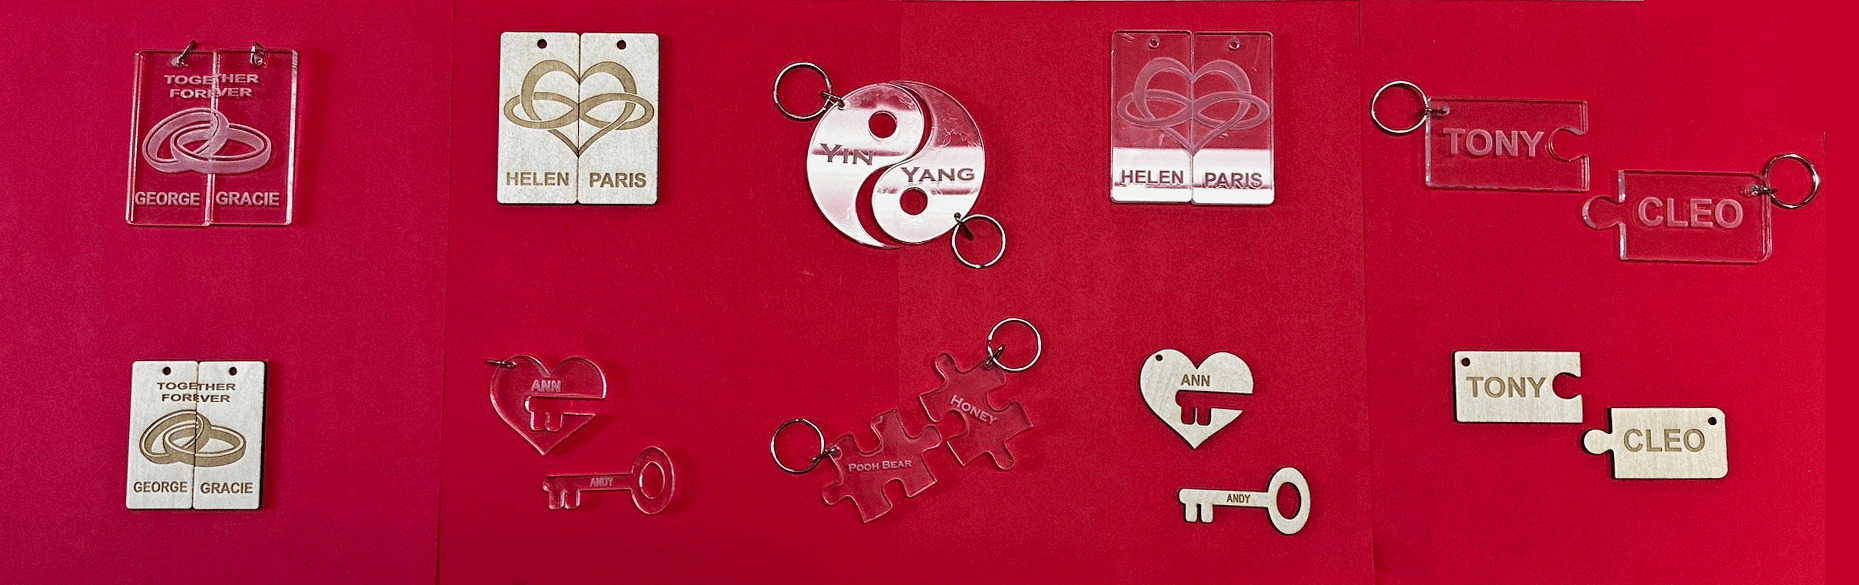 Couples key rings samples